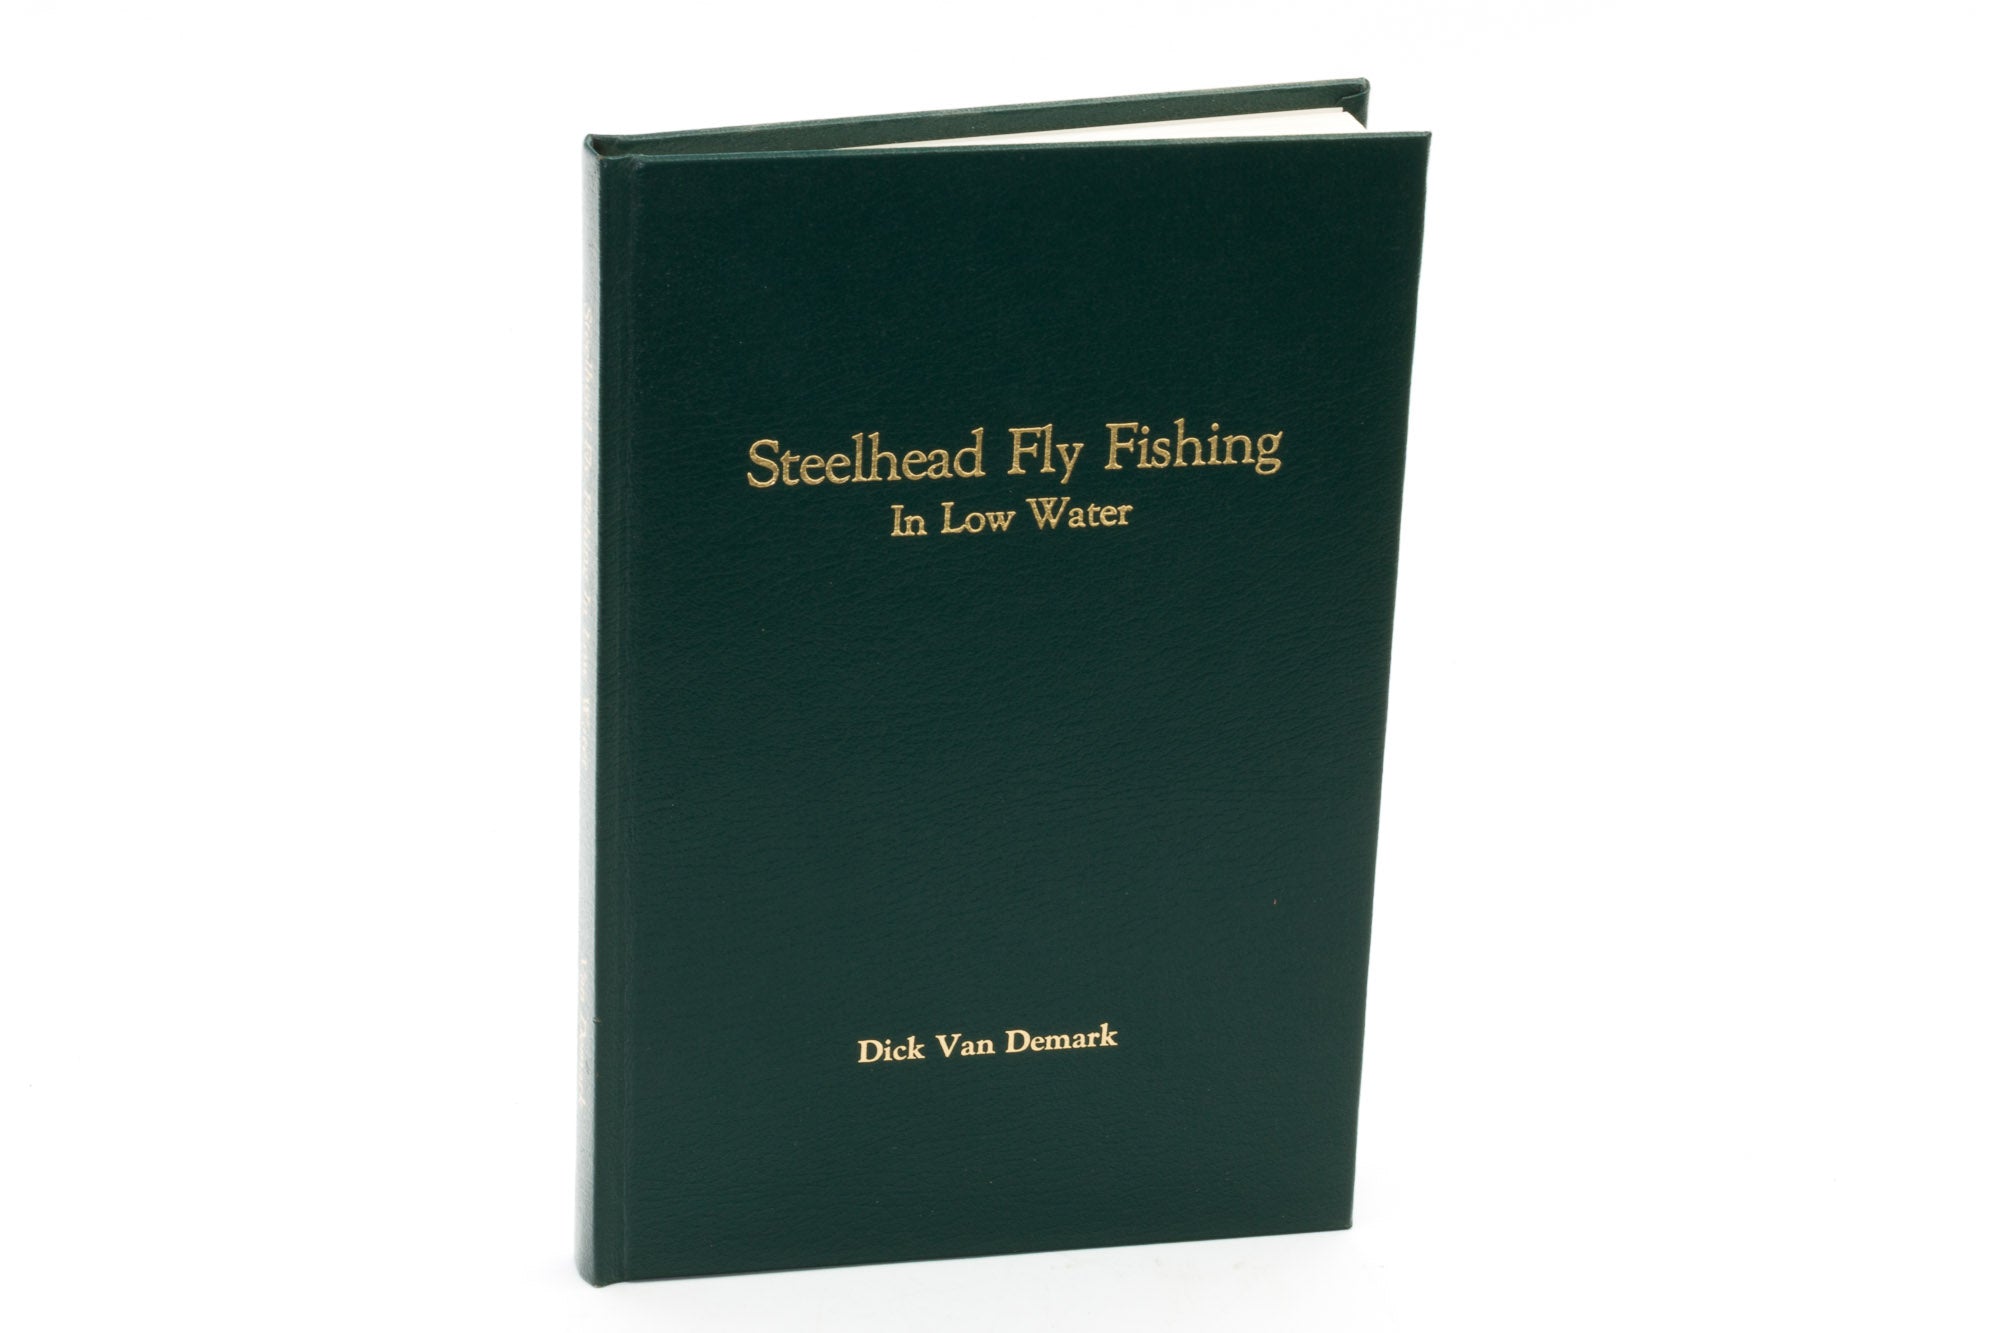 Van Demark, Dick - Steelhead Fly Fishing in Low Water - 1st. Ed